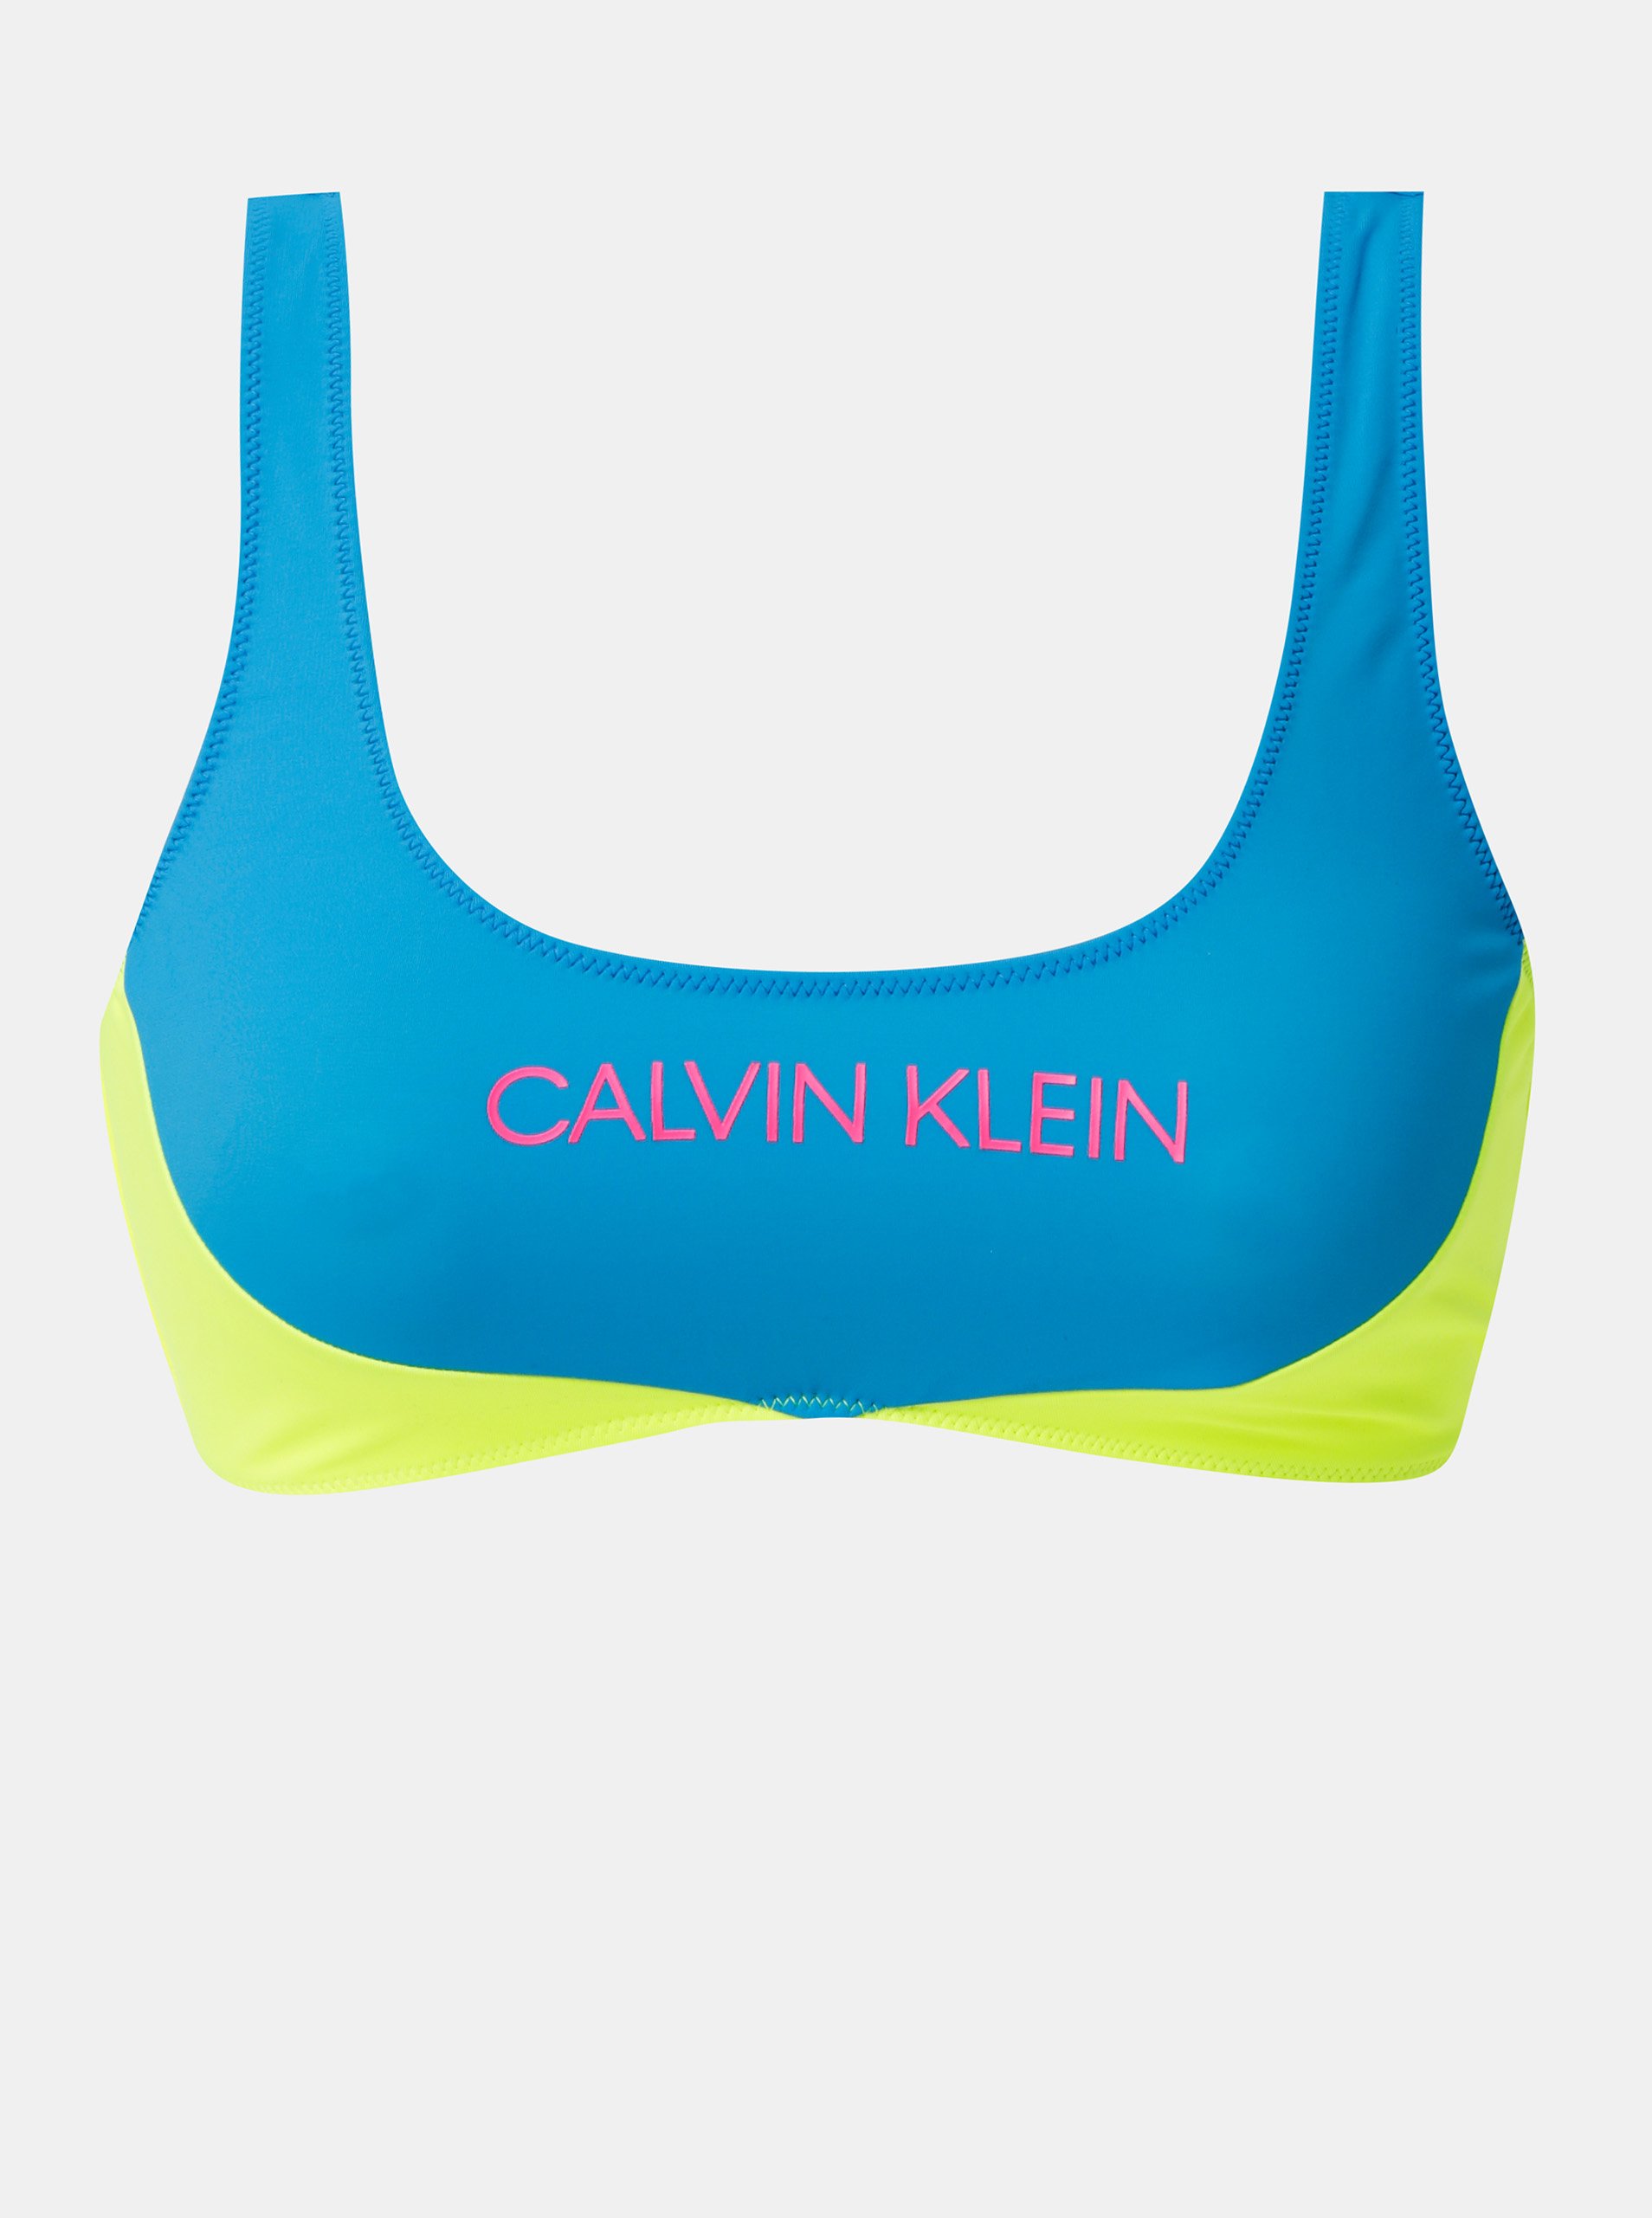 E-shop Žluto-modrý horní díl plavek Calvin Klein Underwear